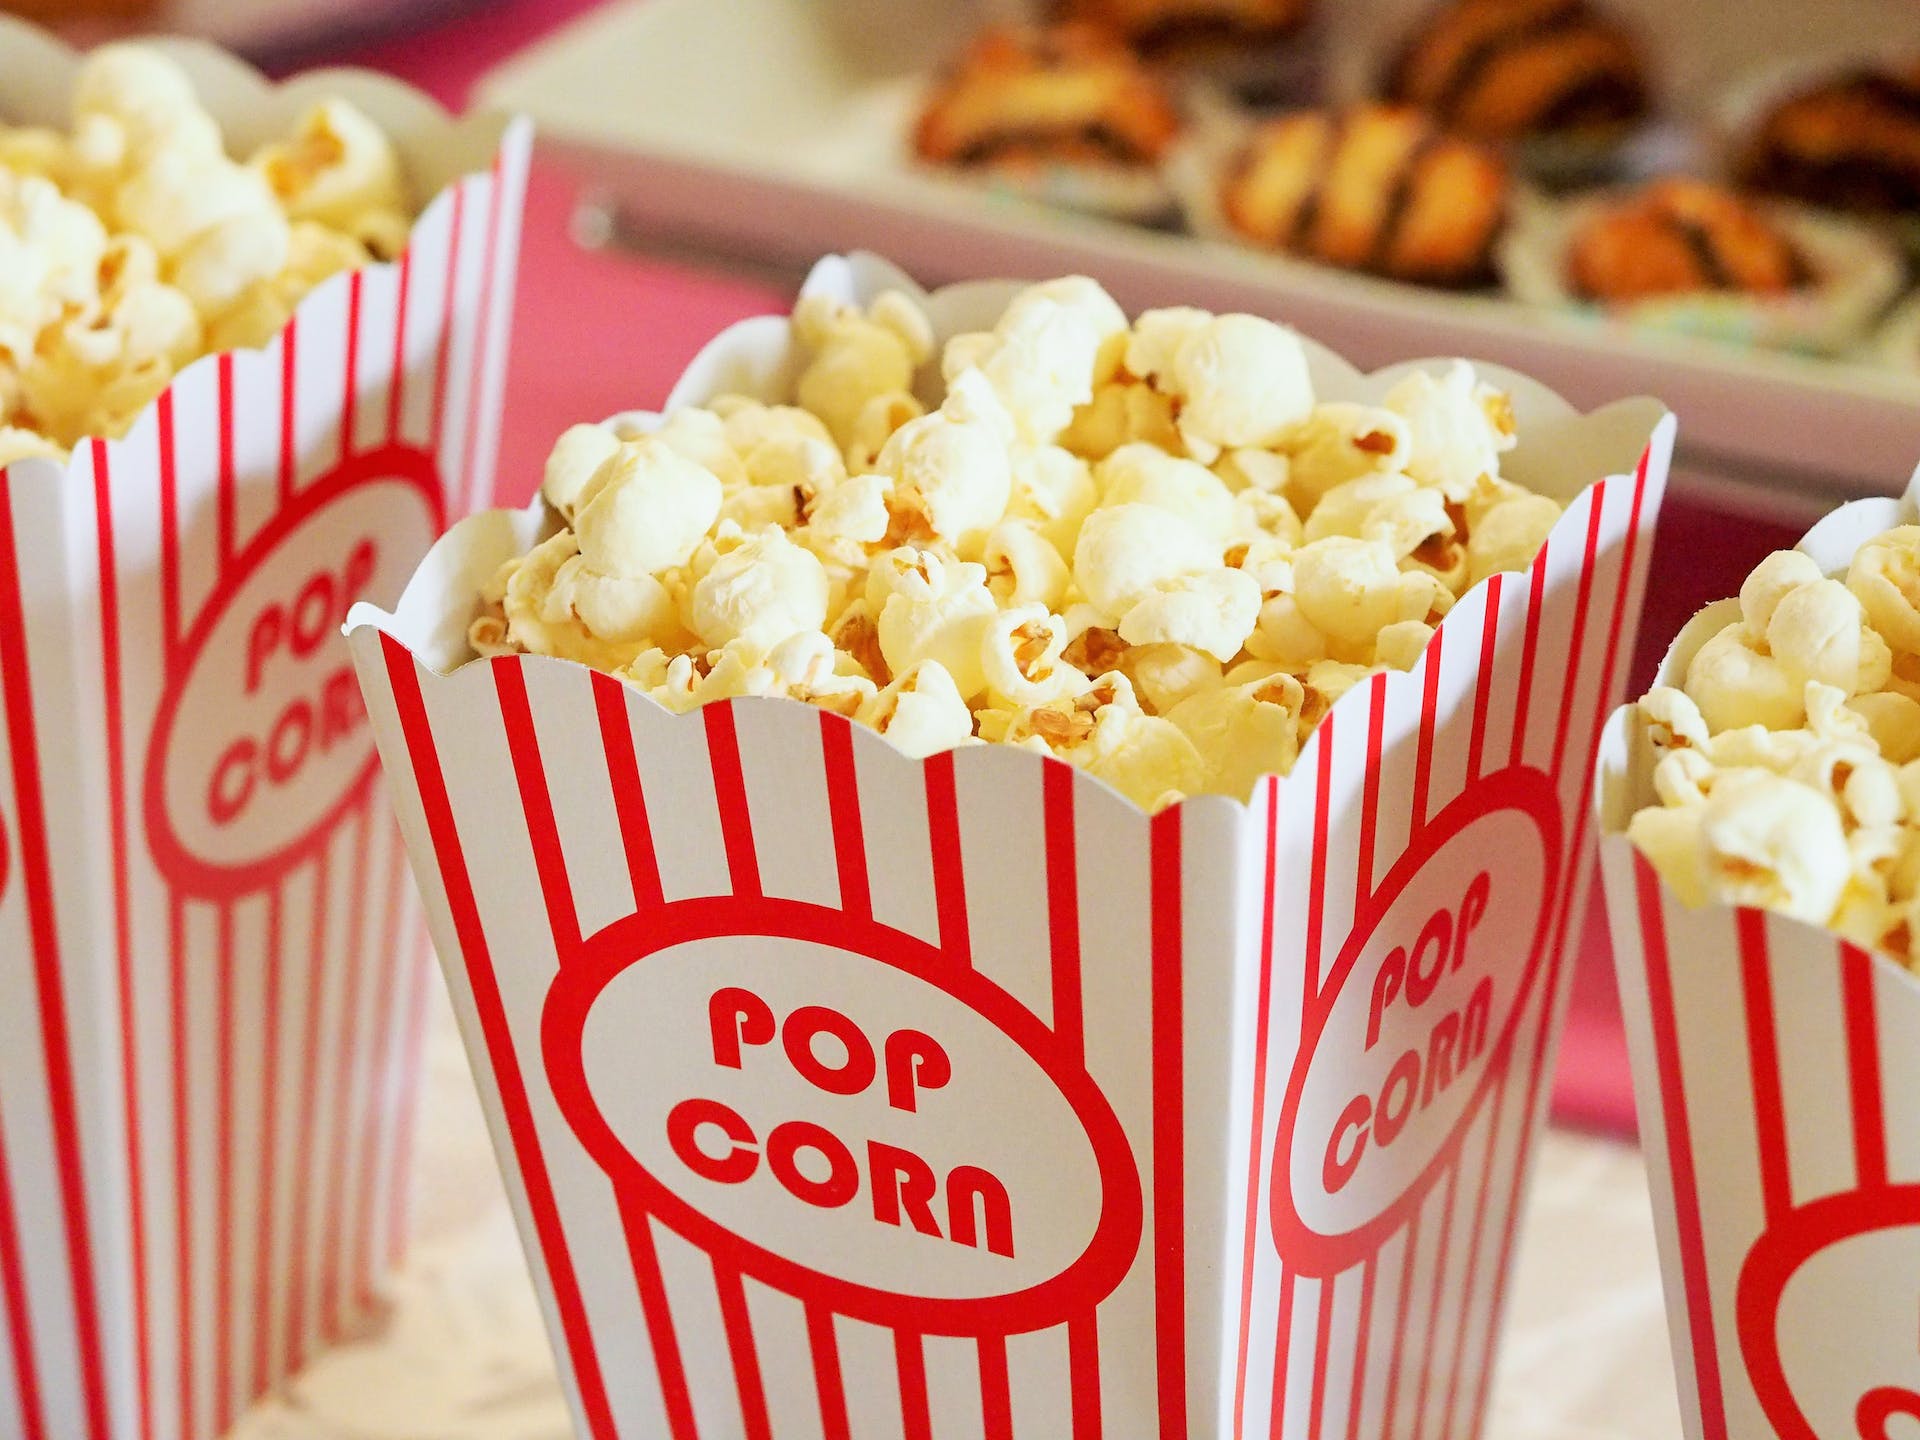 Popcorn | Source: Pexels